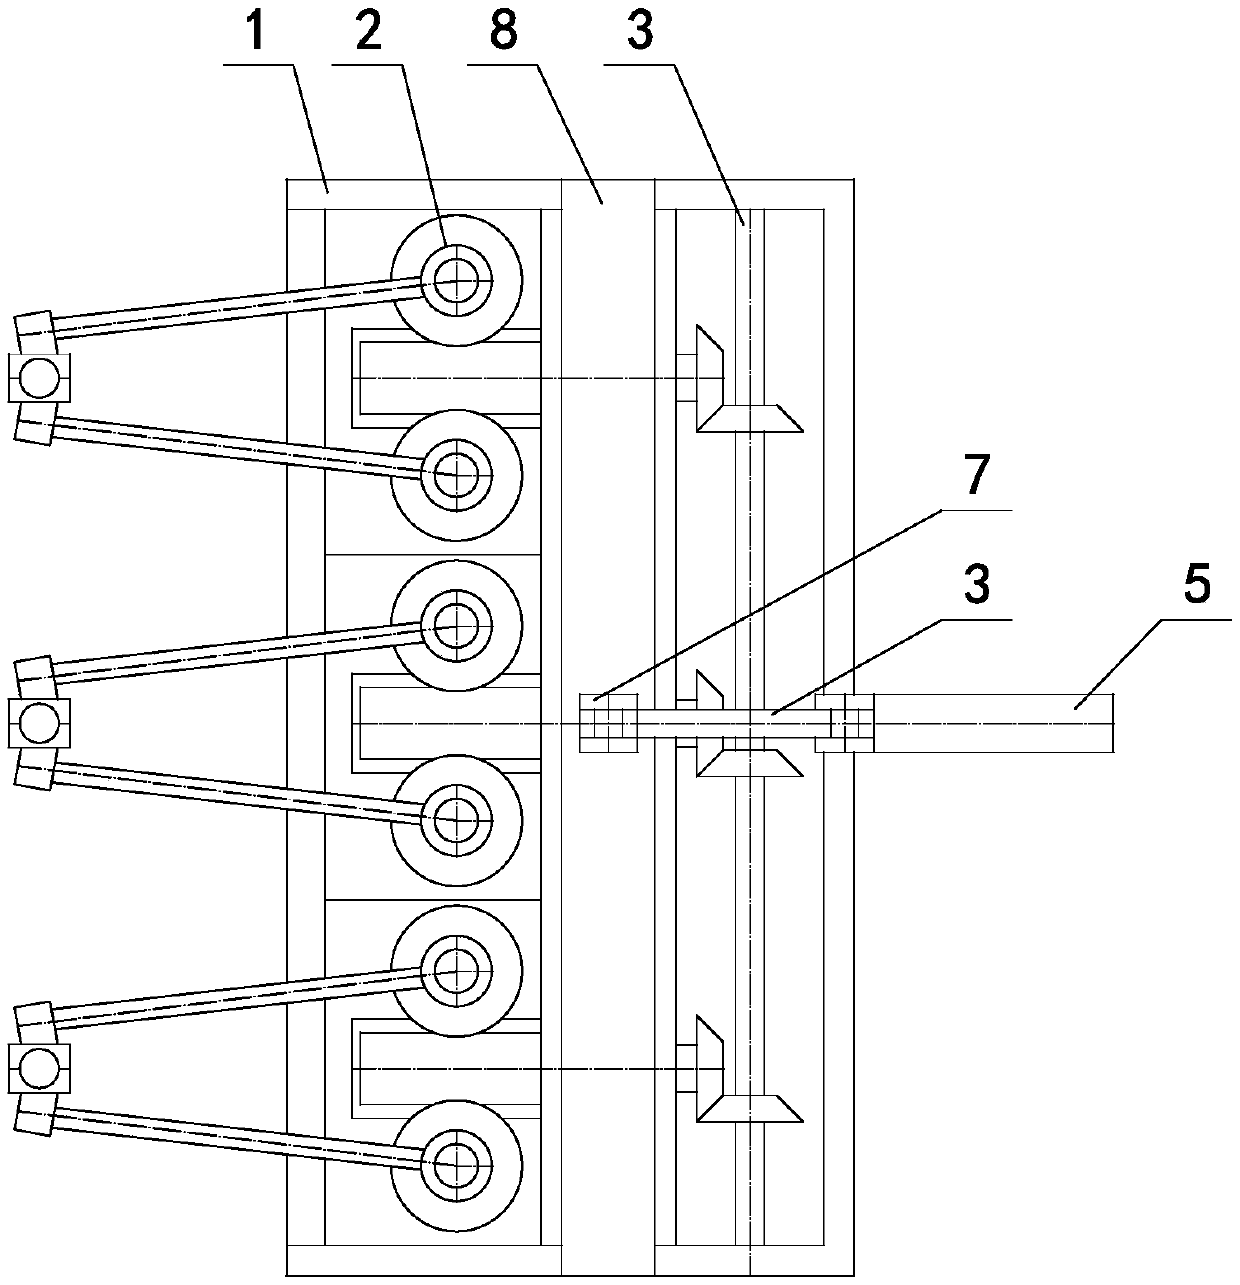 Paper tray grabbing mechanism